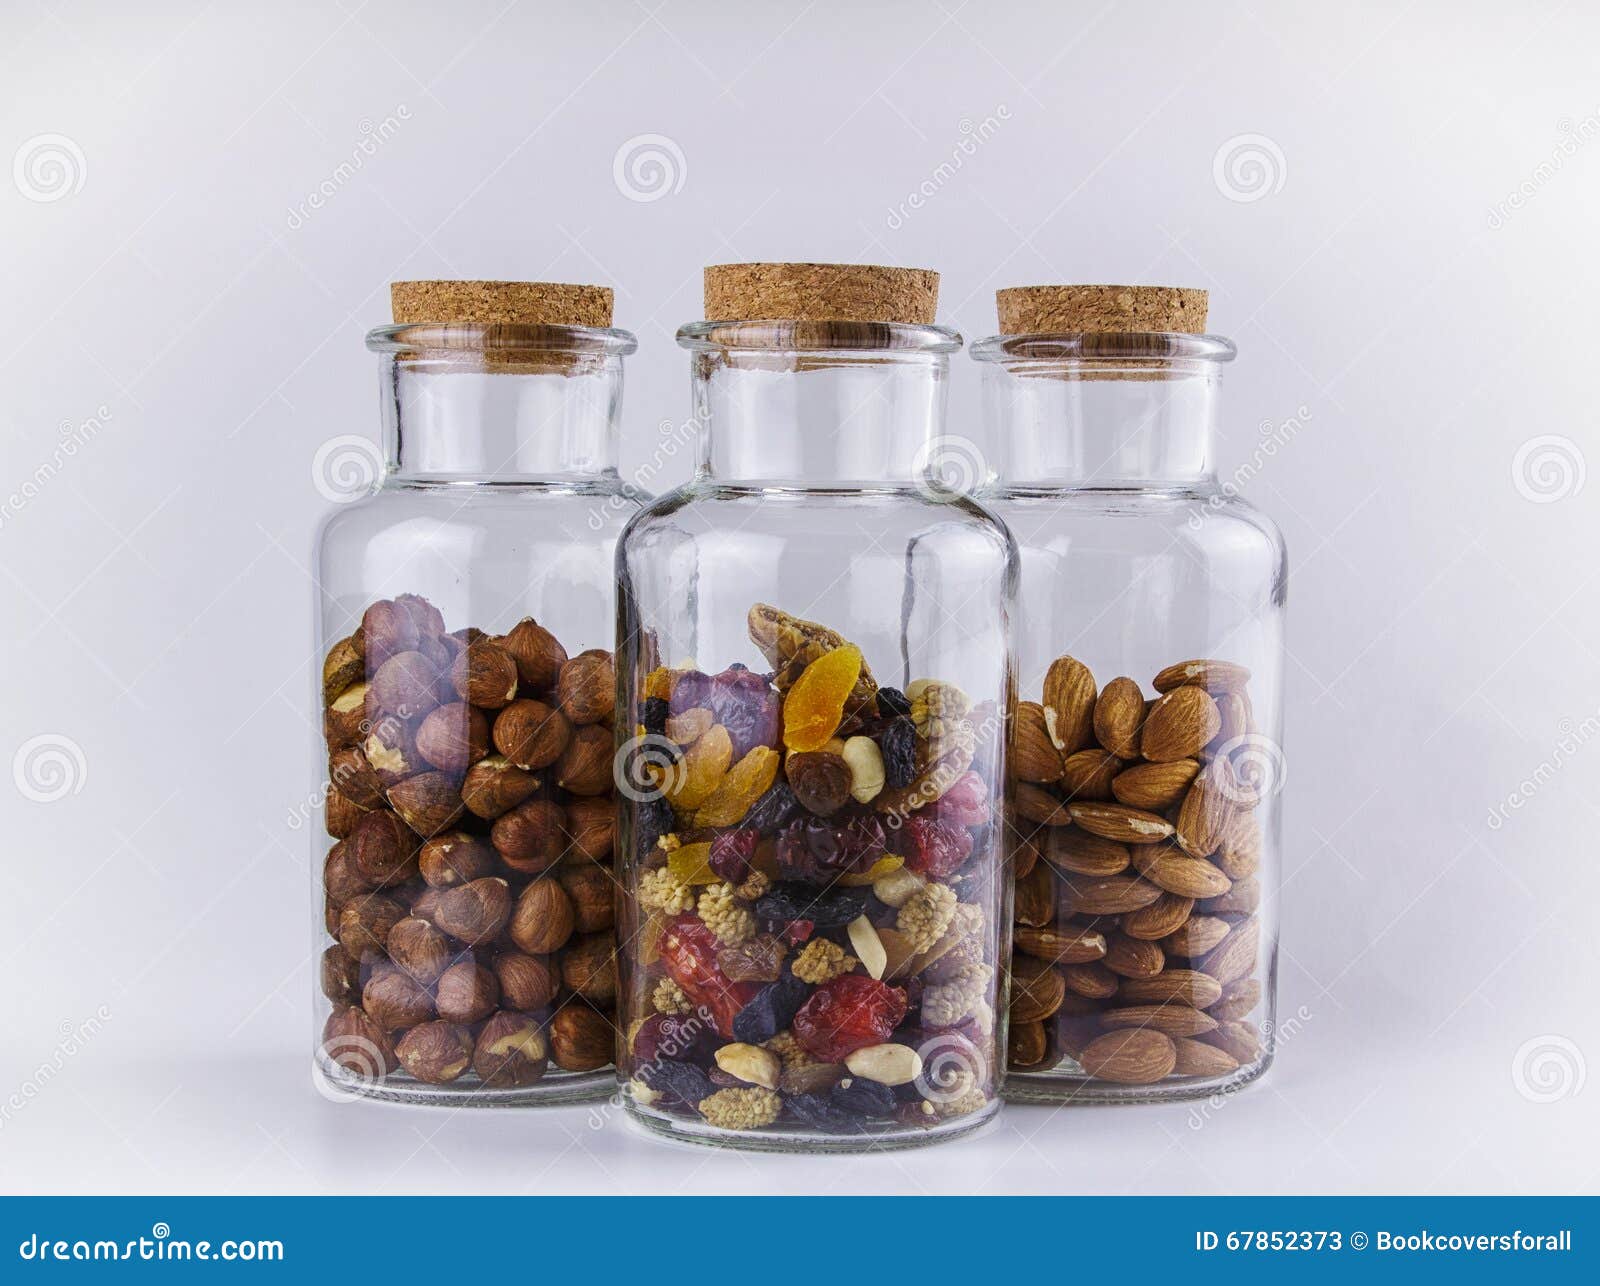 dry fruit jars